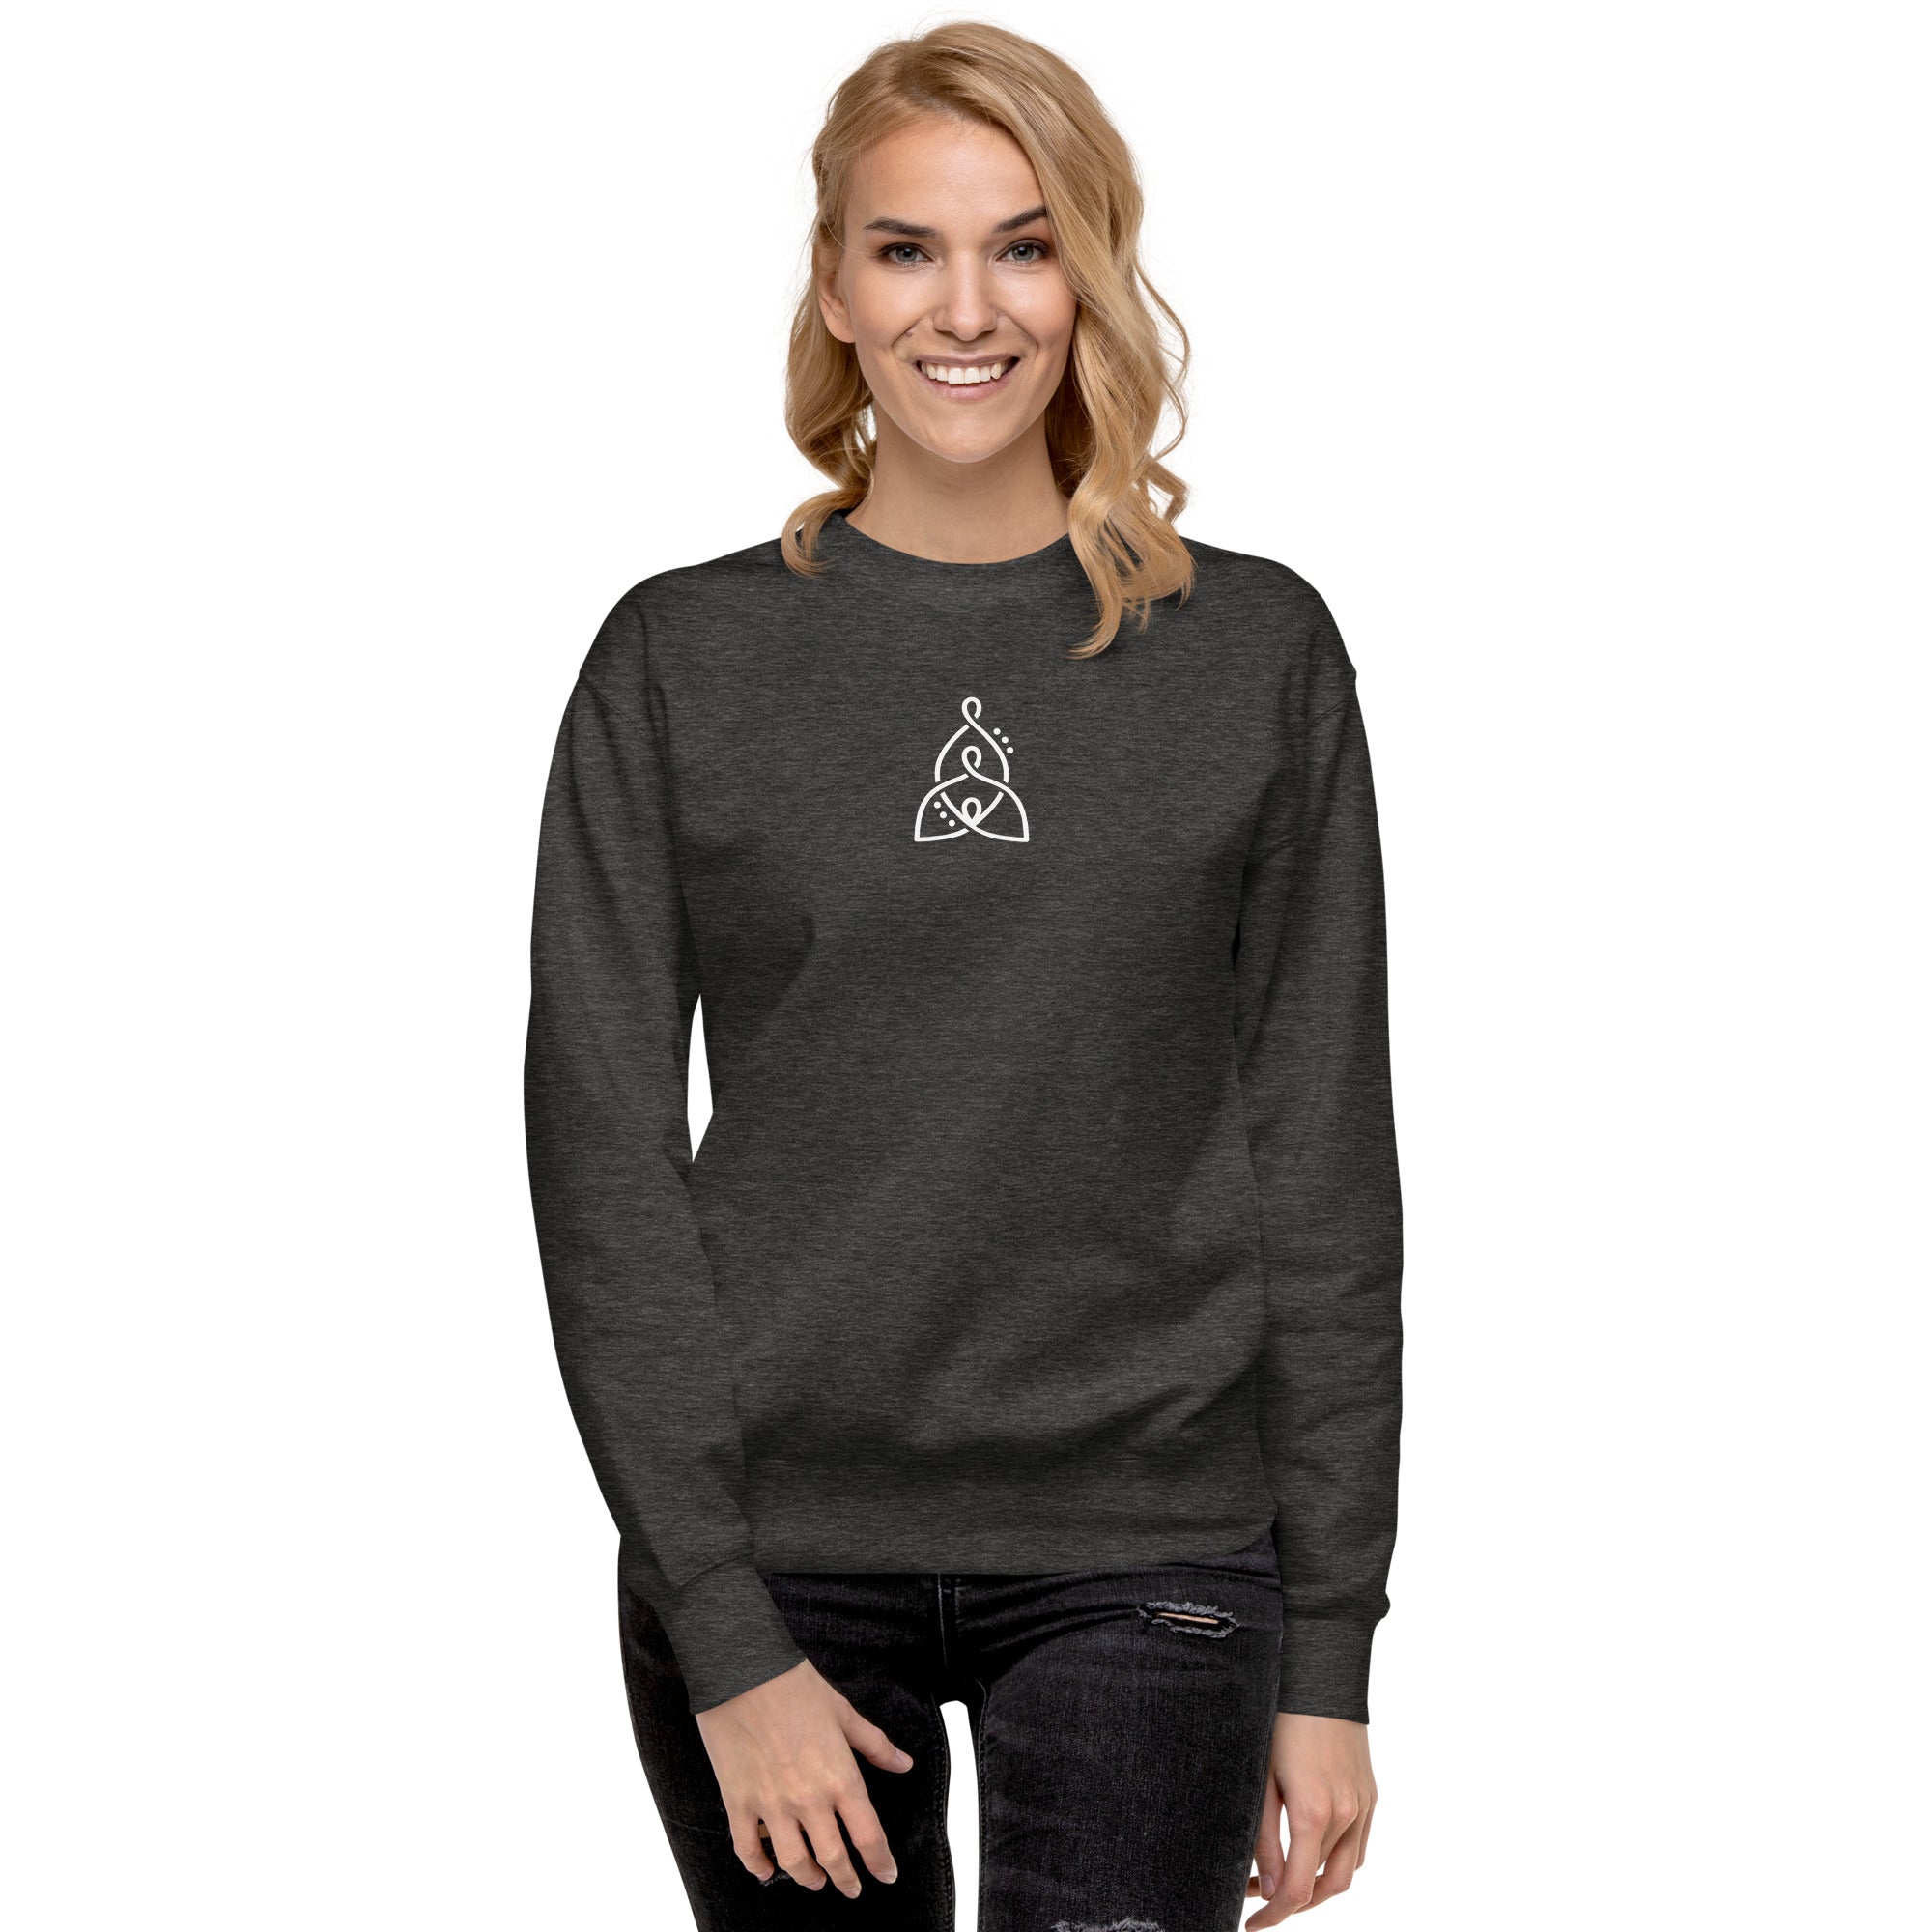 unisex-premium-sweatshirt-charcoal-heather-front-2-663d0a383d4fa.jpg